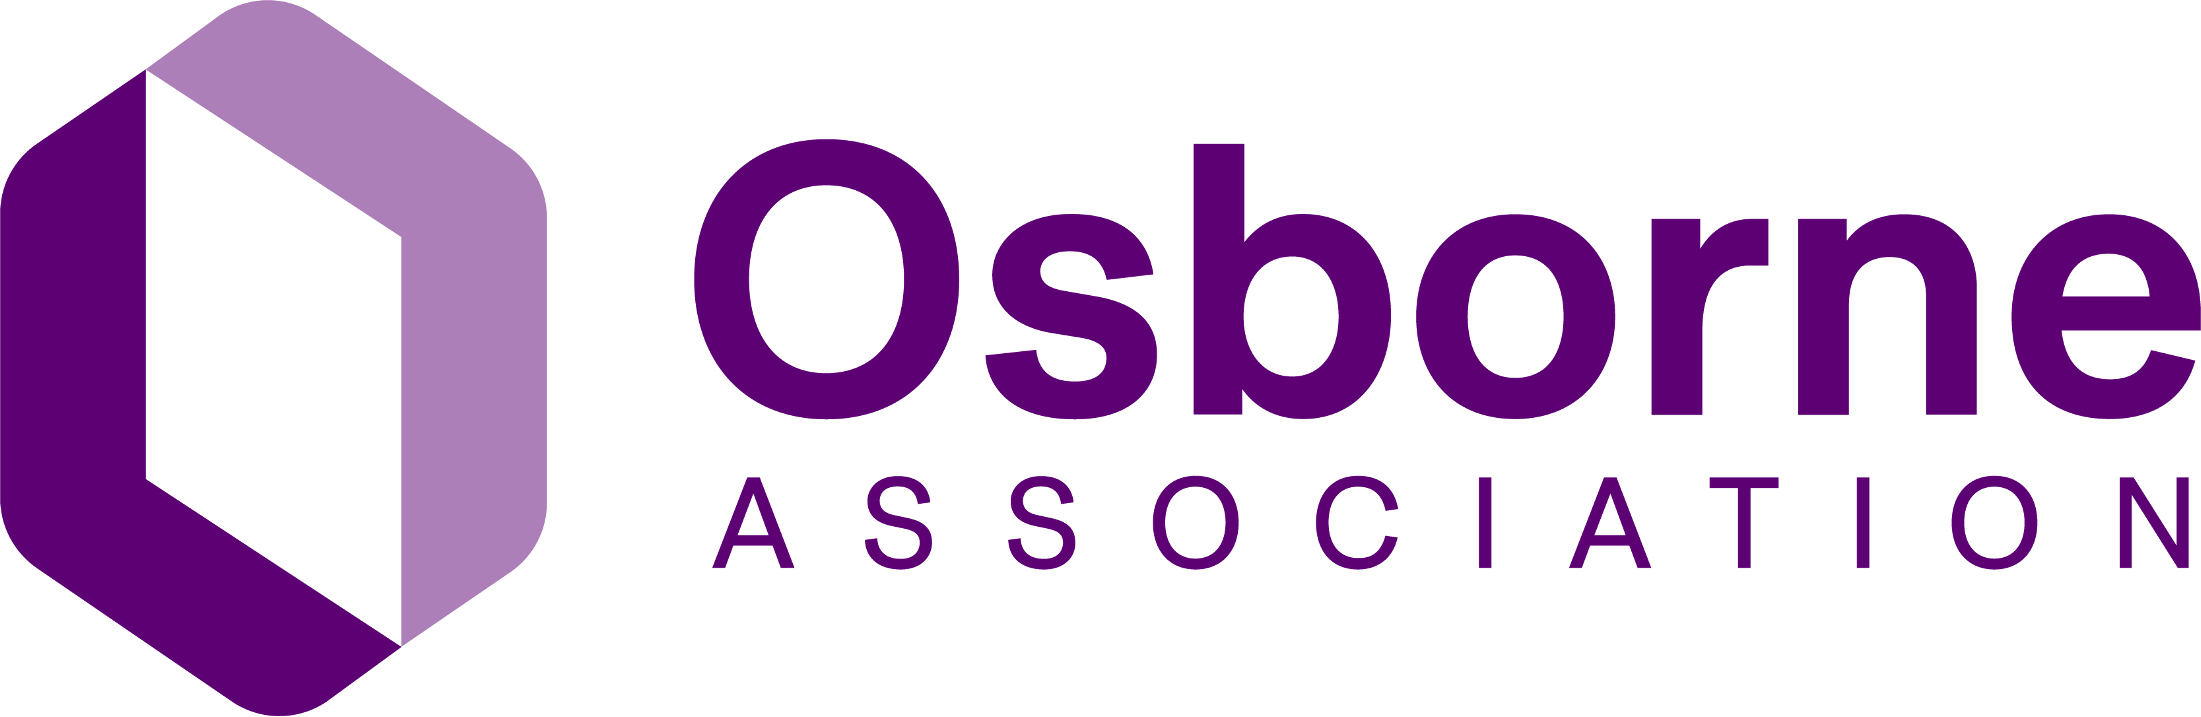 Osborne Association logo